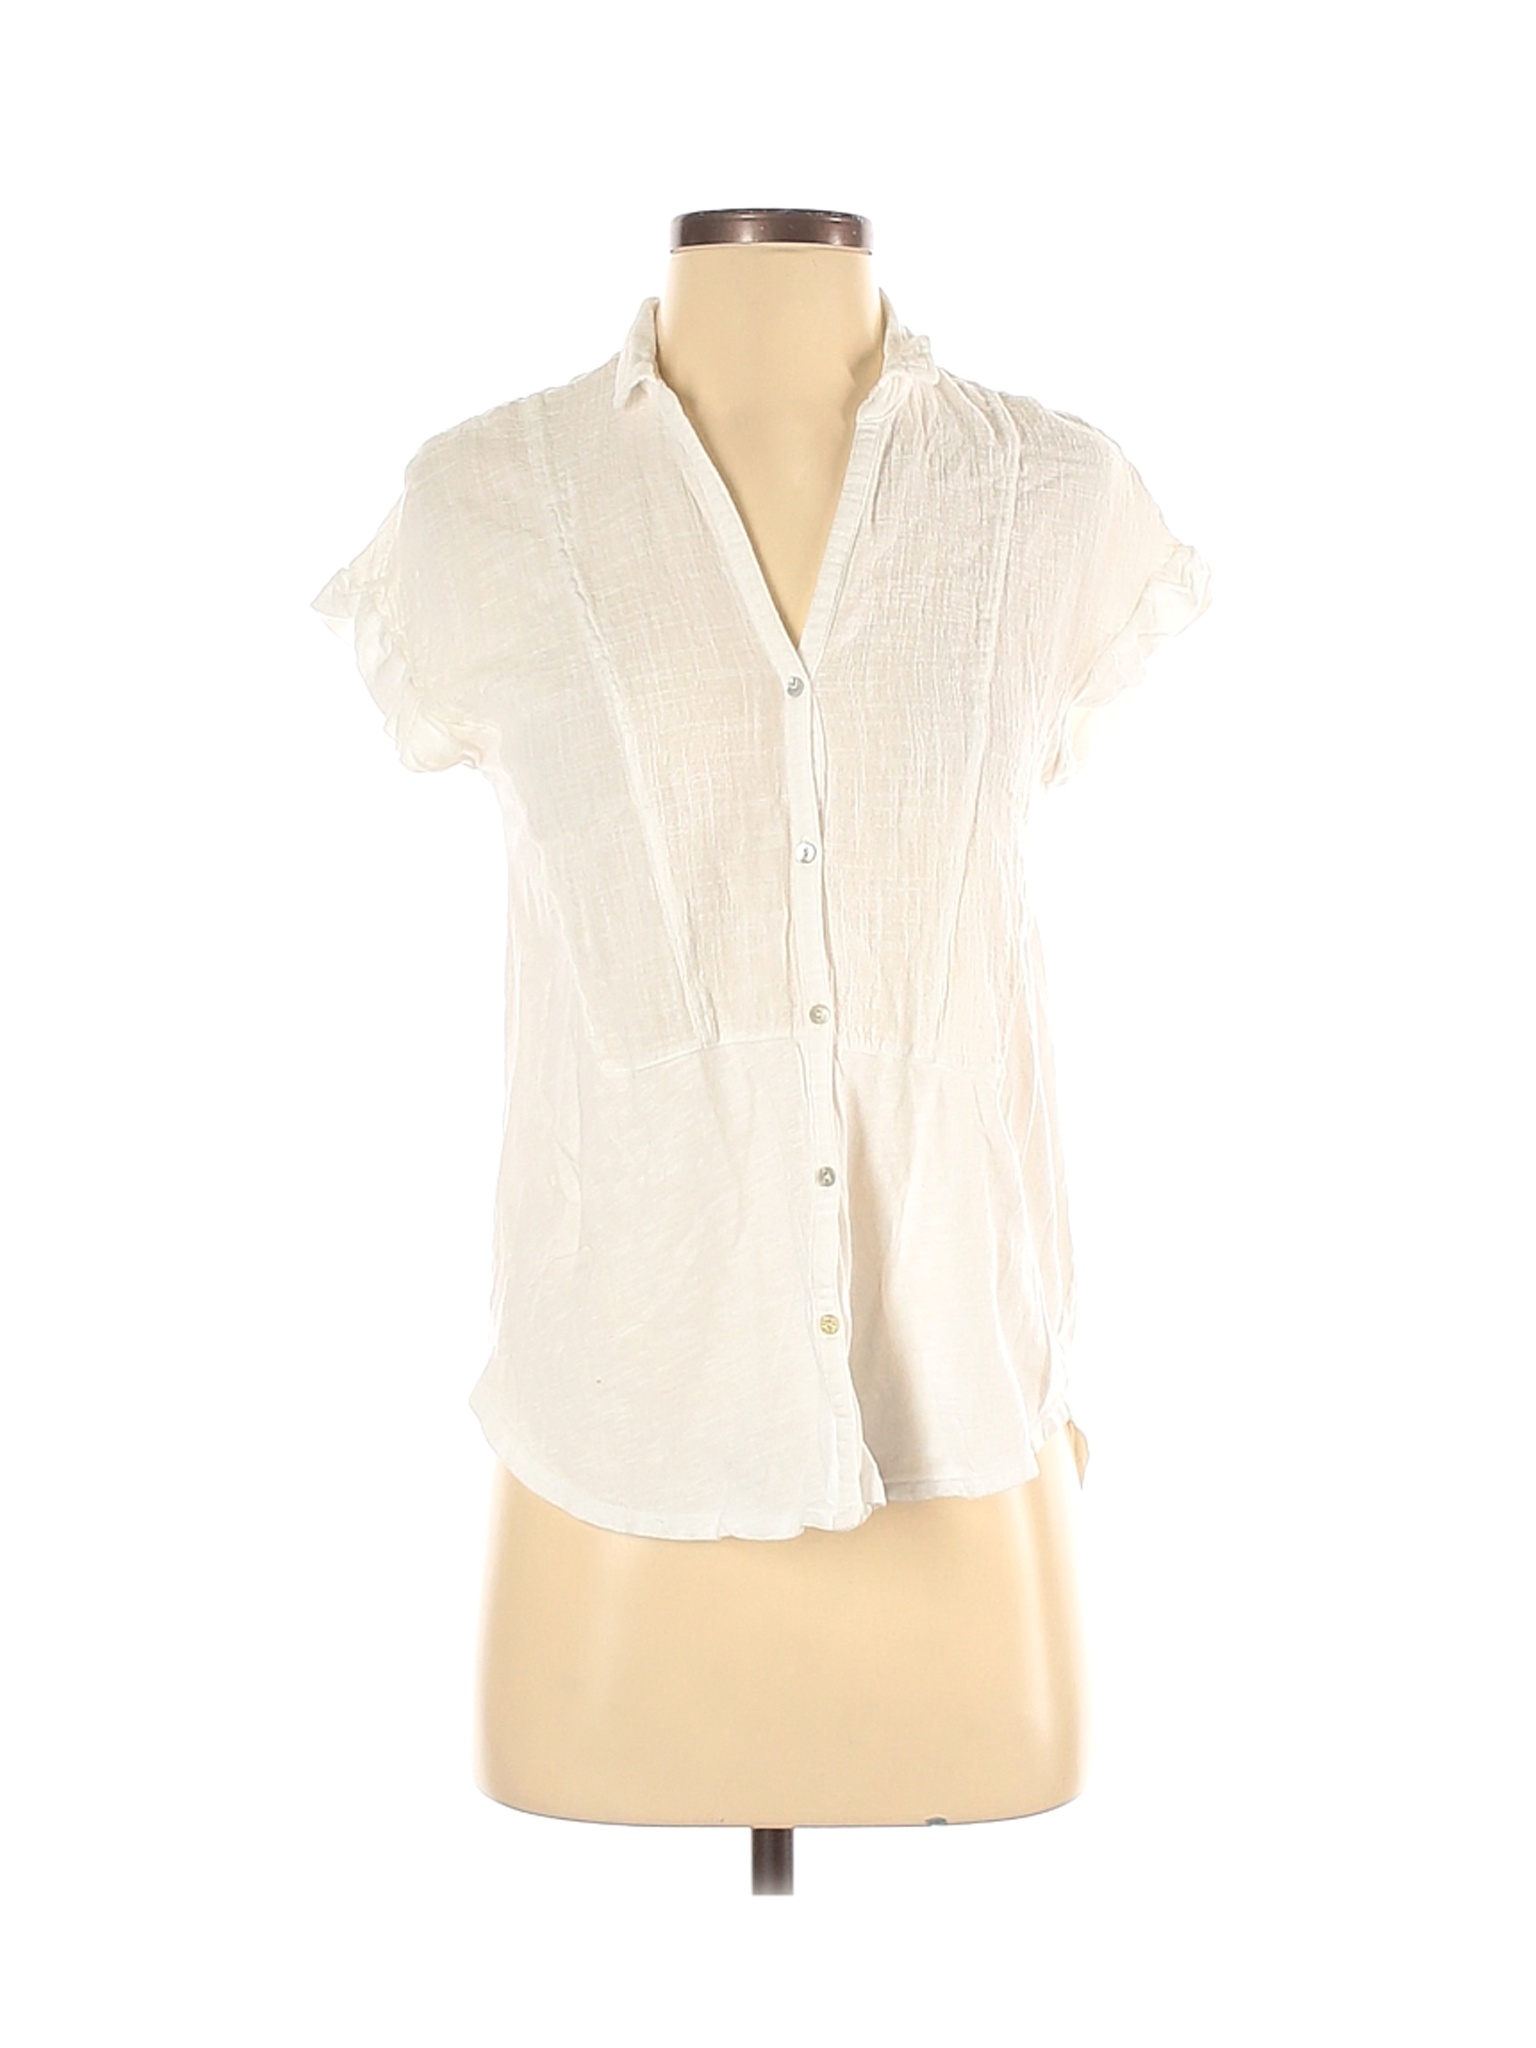 Lucky Brand Women Ivory Short Sleeve Blouse XS | eBay